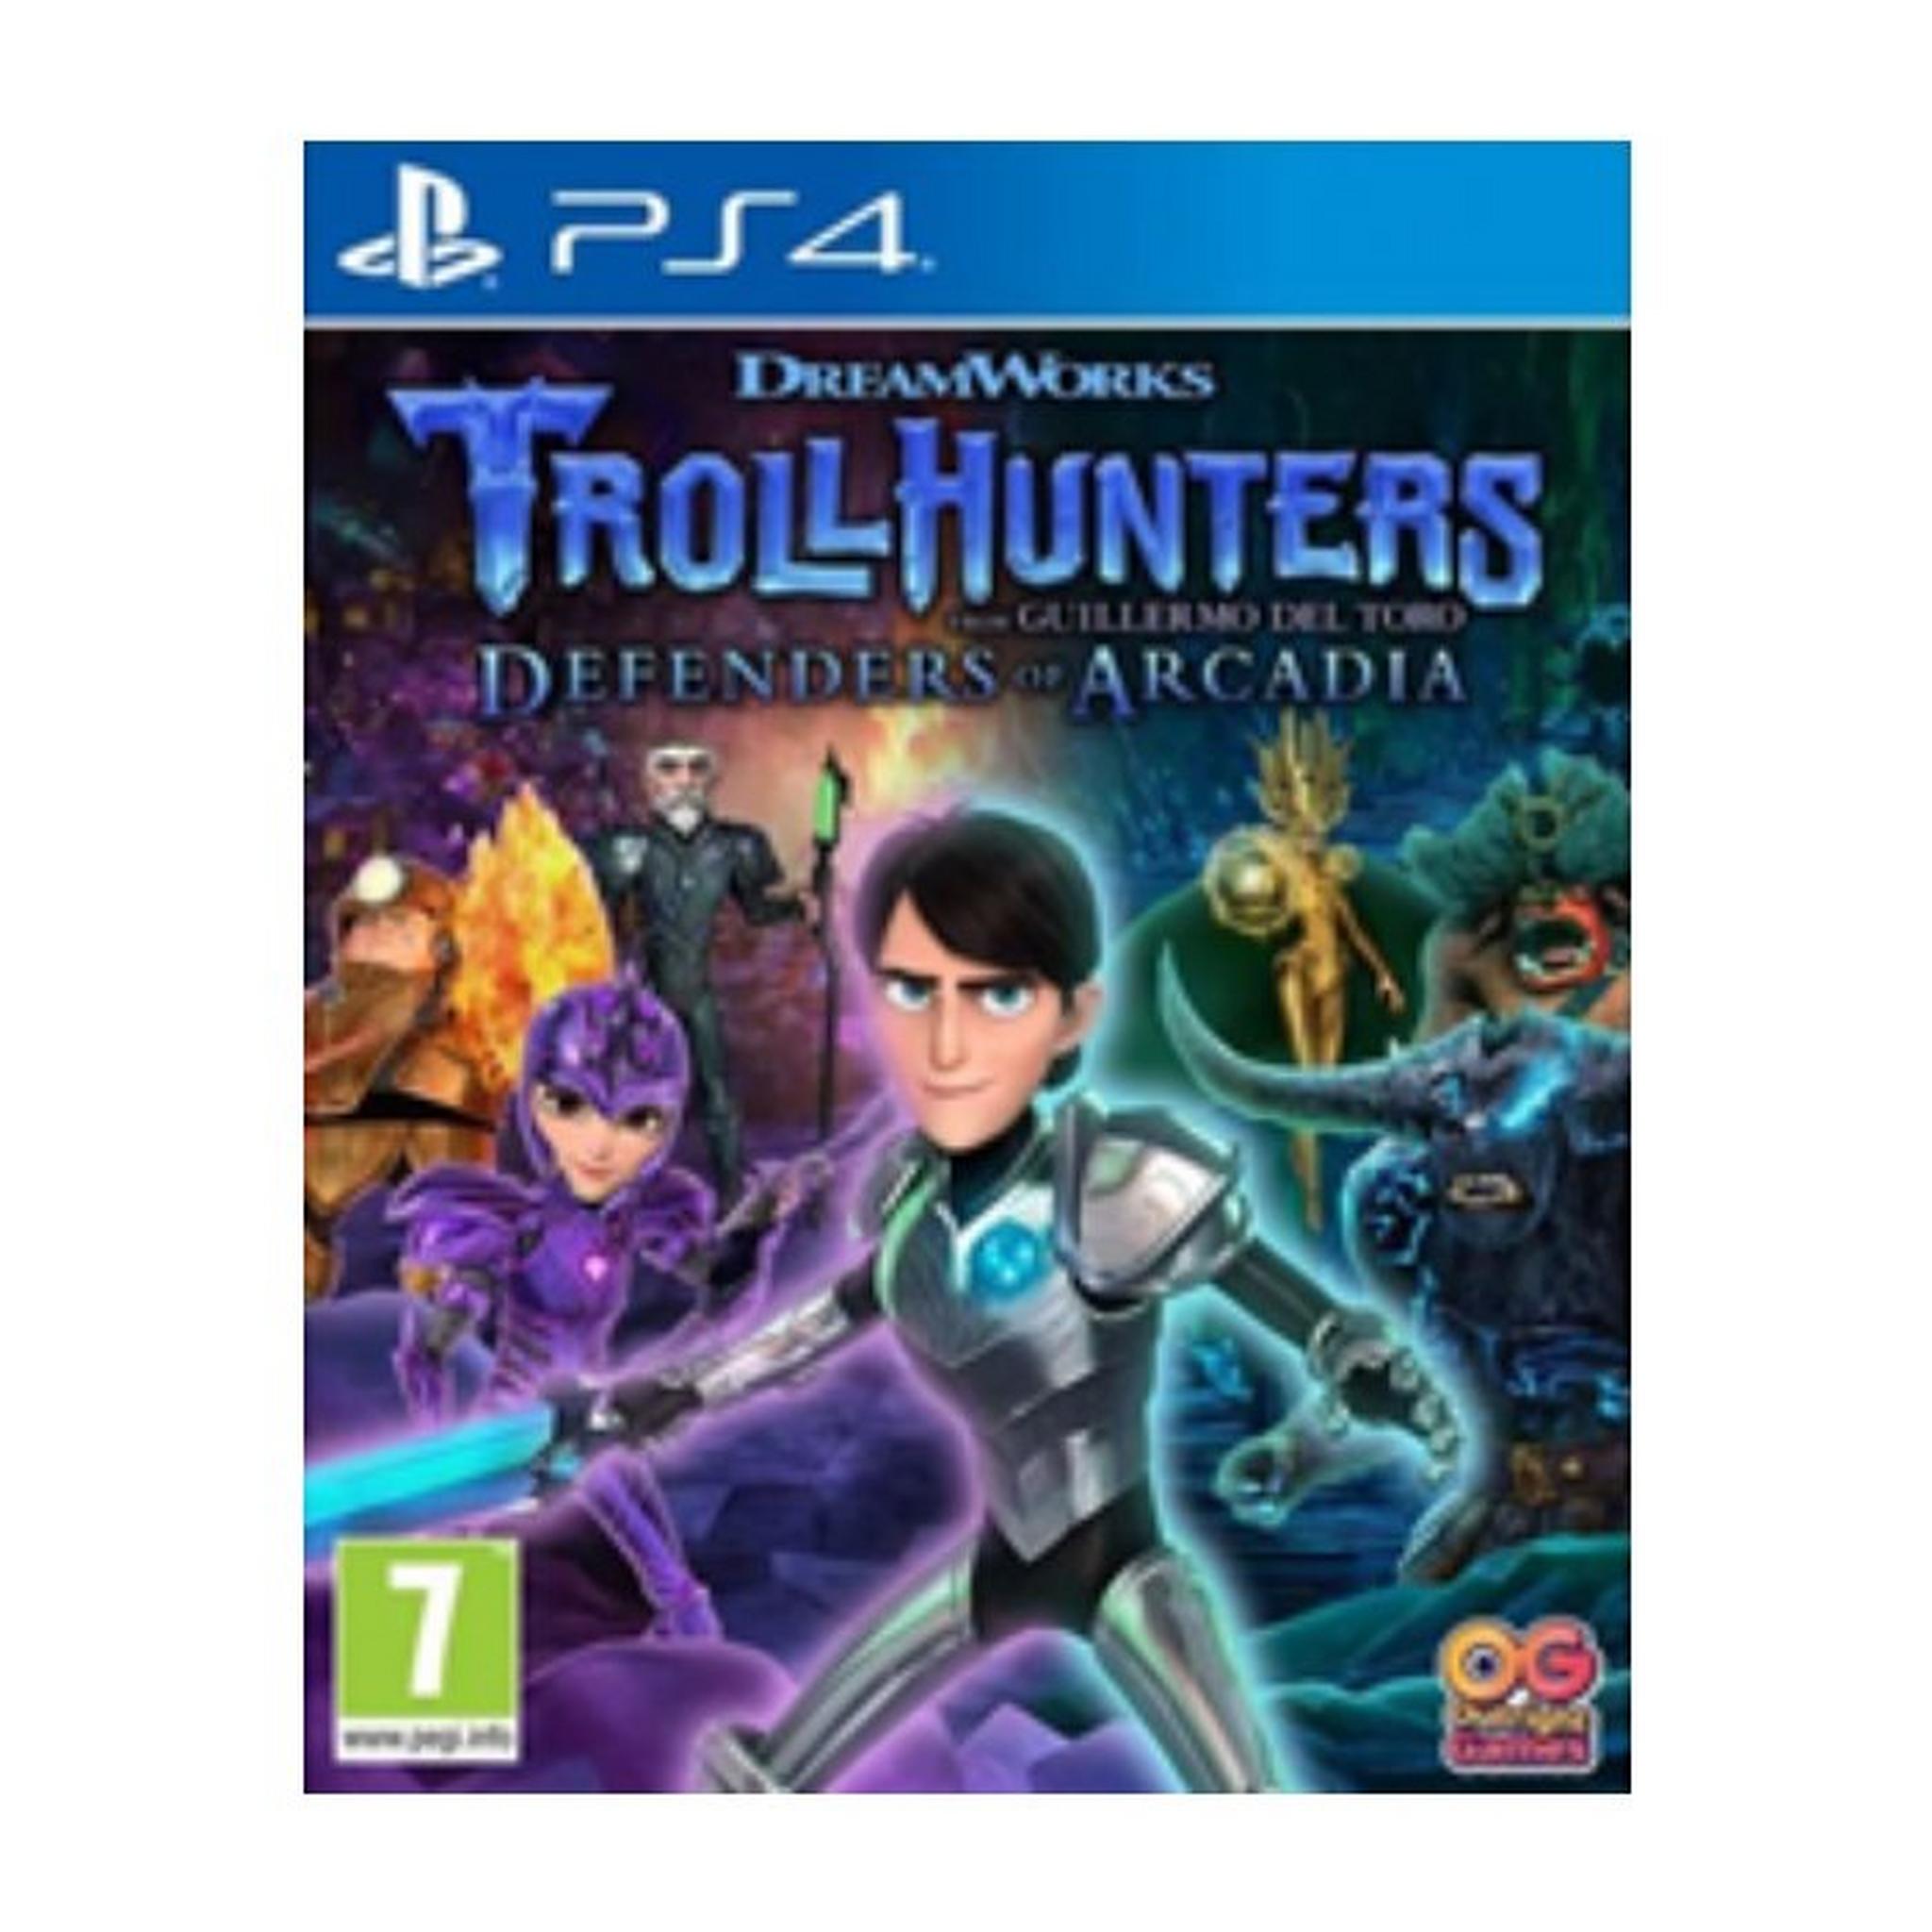 Trollhunters: Defenders of Arcadia - PS4 Game